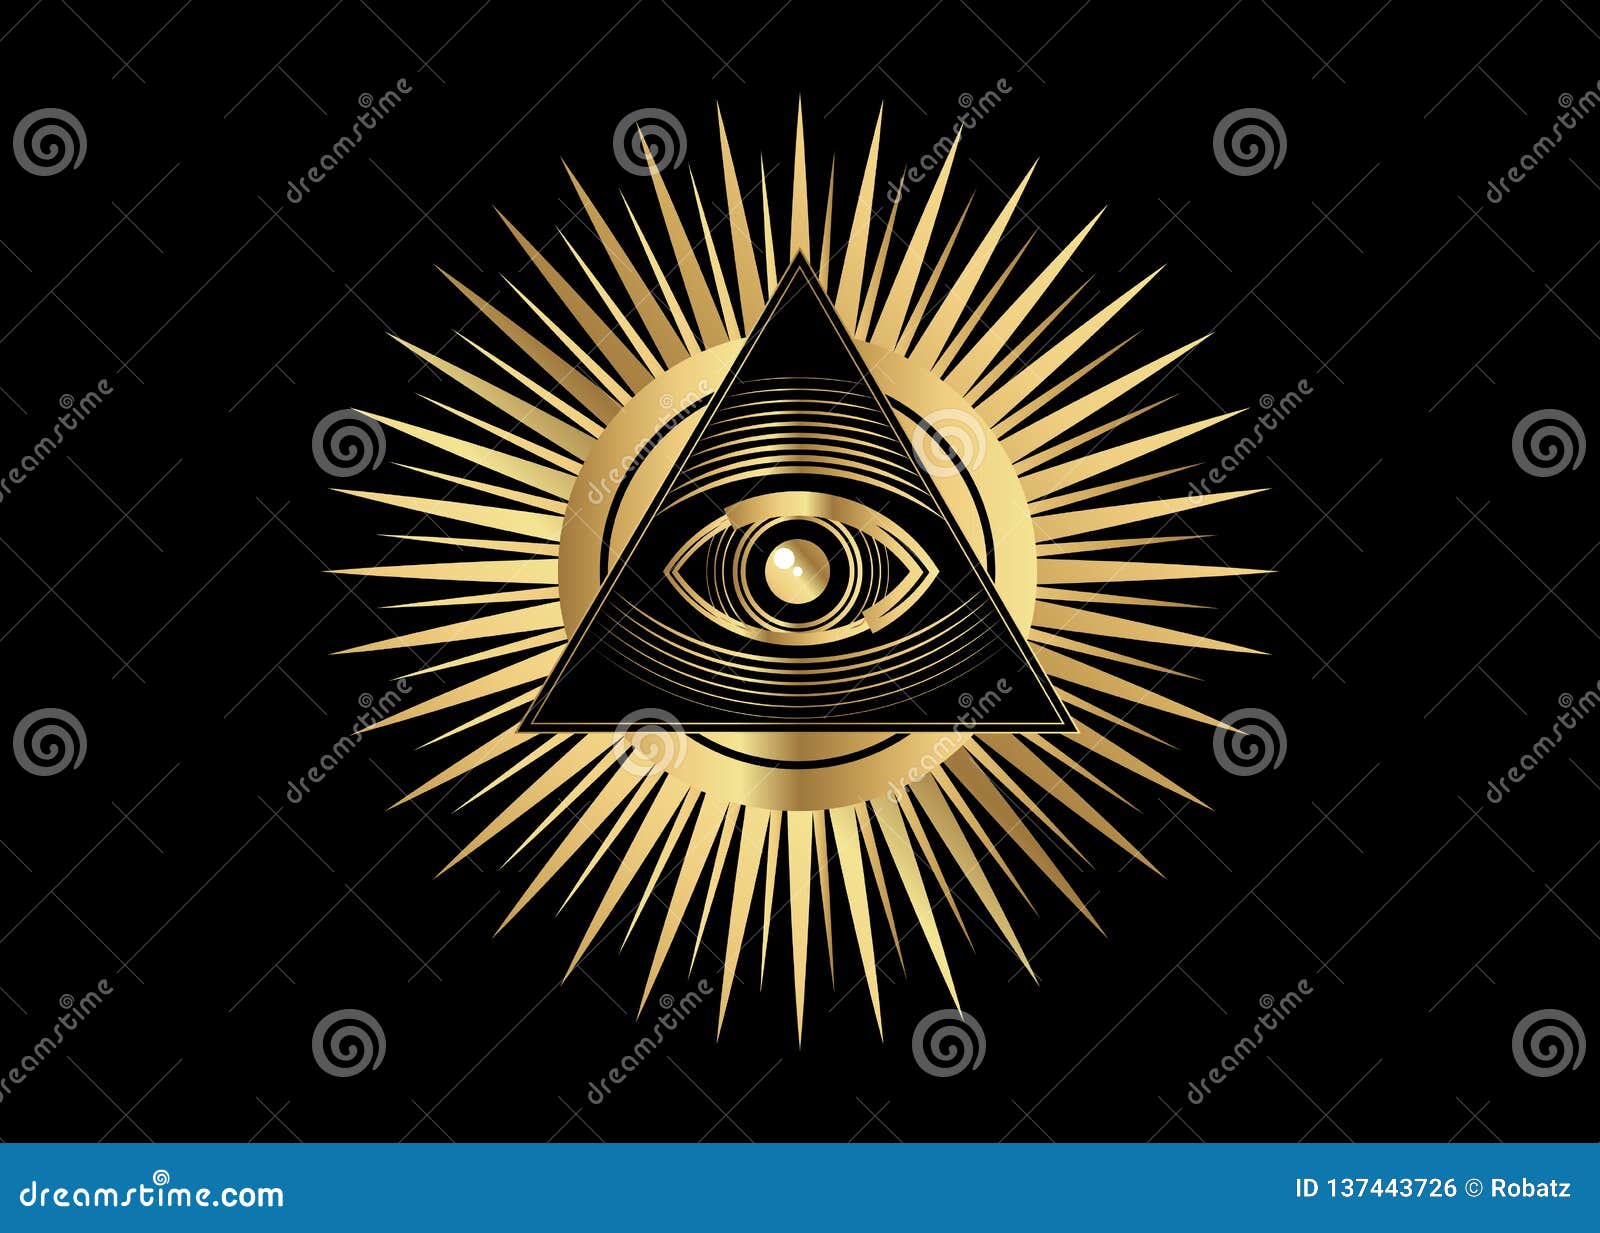 sacred masonic . gold all seeing eye, the third eye the eye of providence inside triangle pyramid. new world order